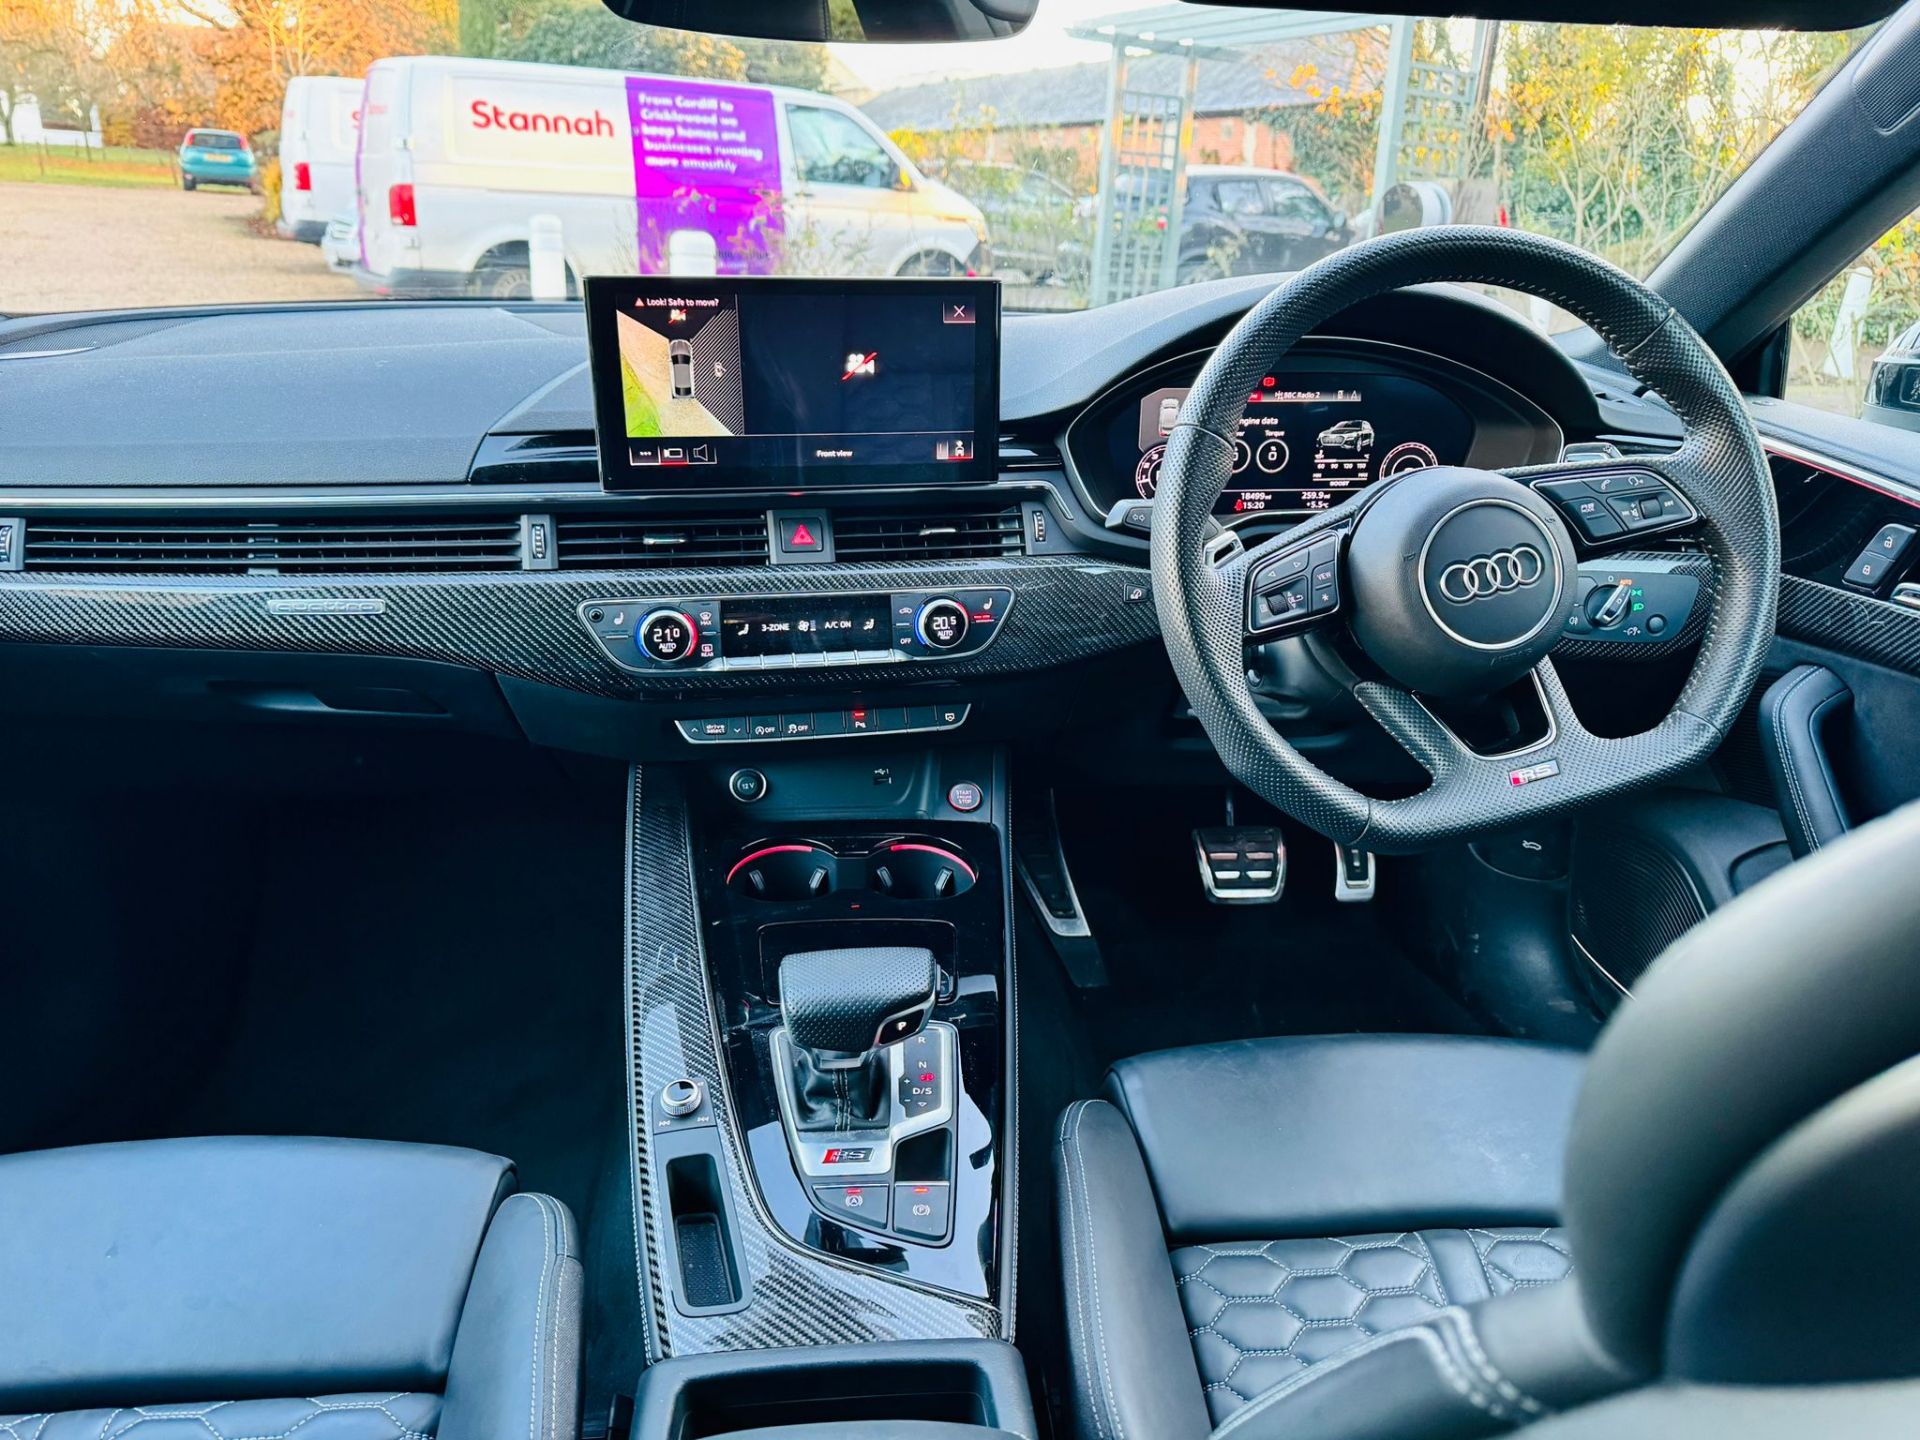 Audi RS5 TFSI "CARBON BLACK EDITION" QUATTRO (450BHP) 2021 21 Reg “HUGE SPEC” 1 OWNER 18K MILES - Image 15 of 36